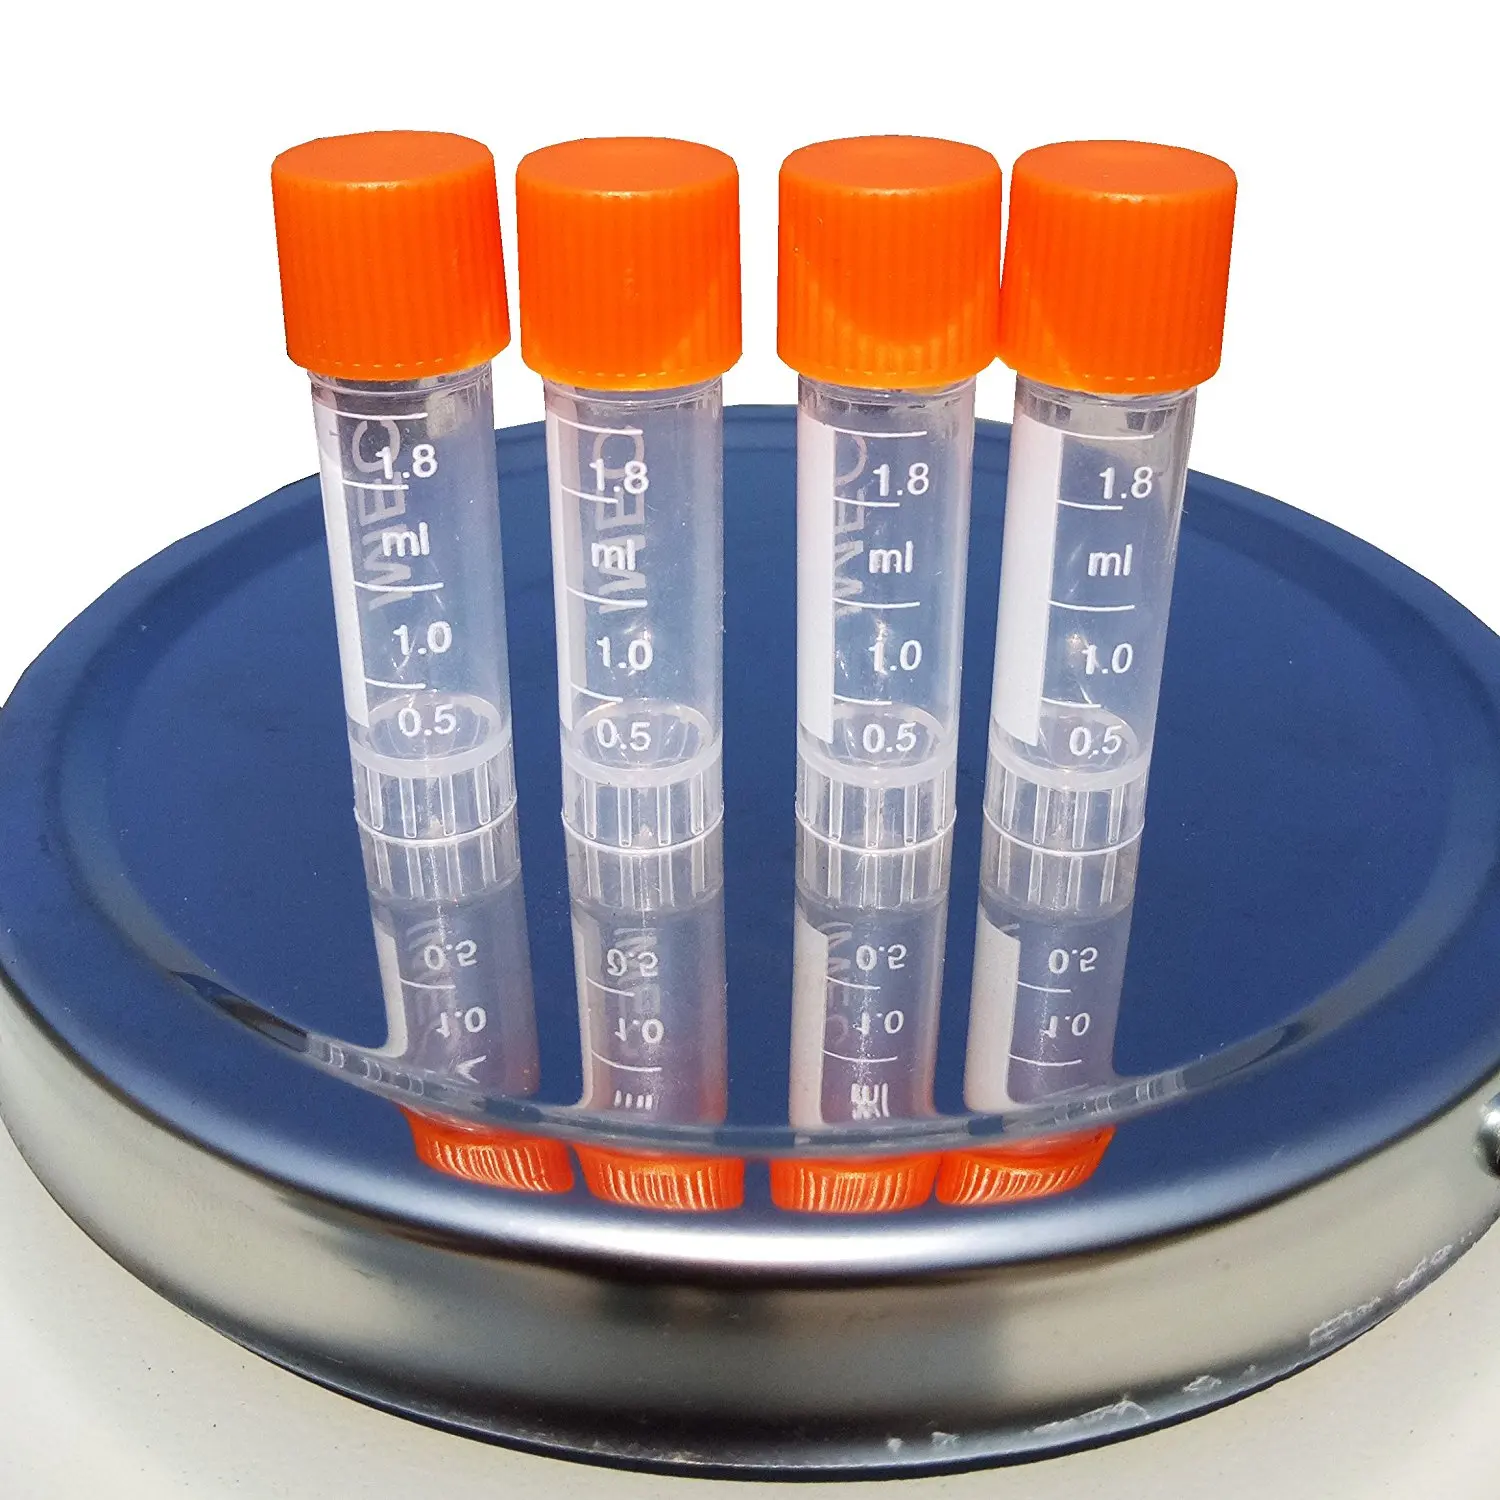 Plastic Test Tube Centrifuge tube 1.8ml Lab Tubes ( Various colors available ) (Orange)